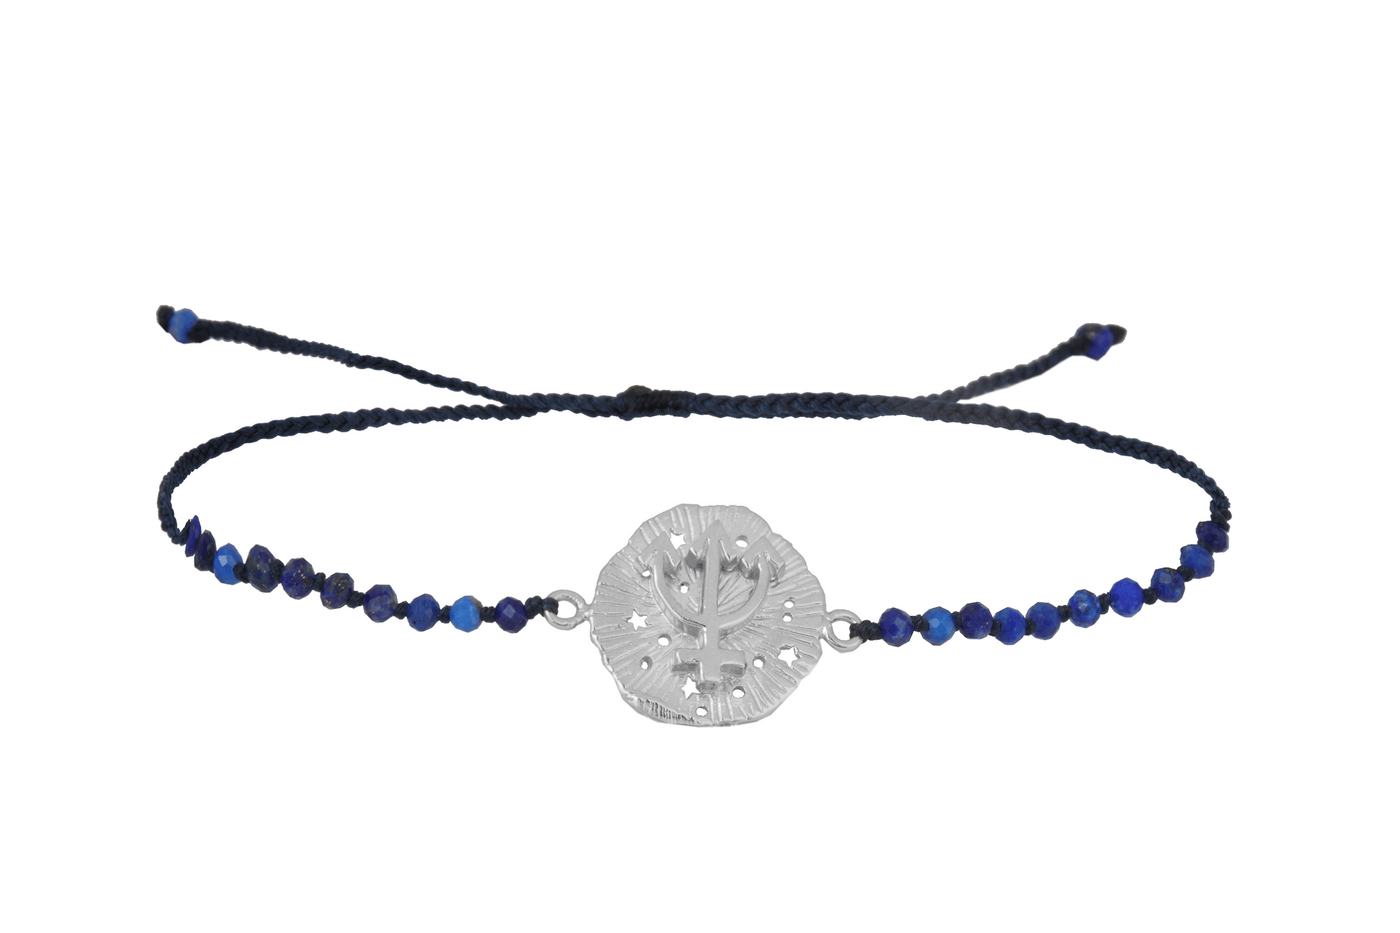 Neptune Medallion Amulet bracelet with beads. Silver